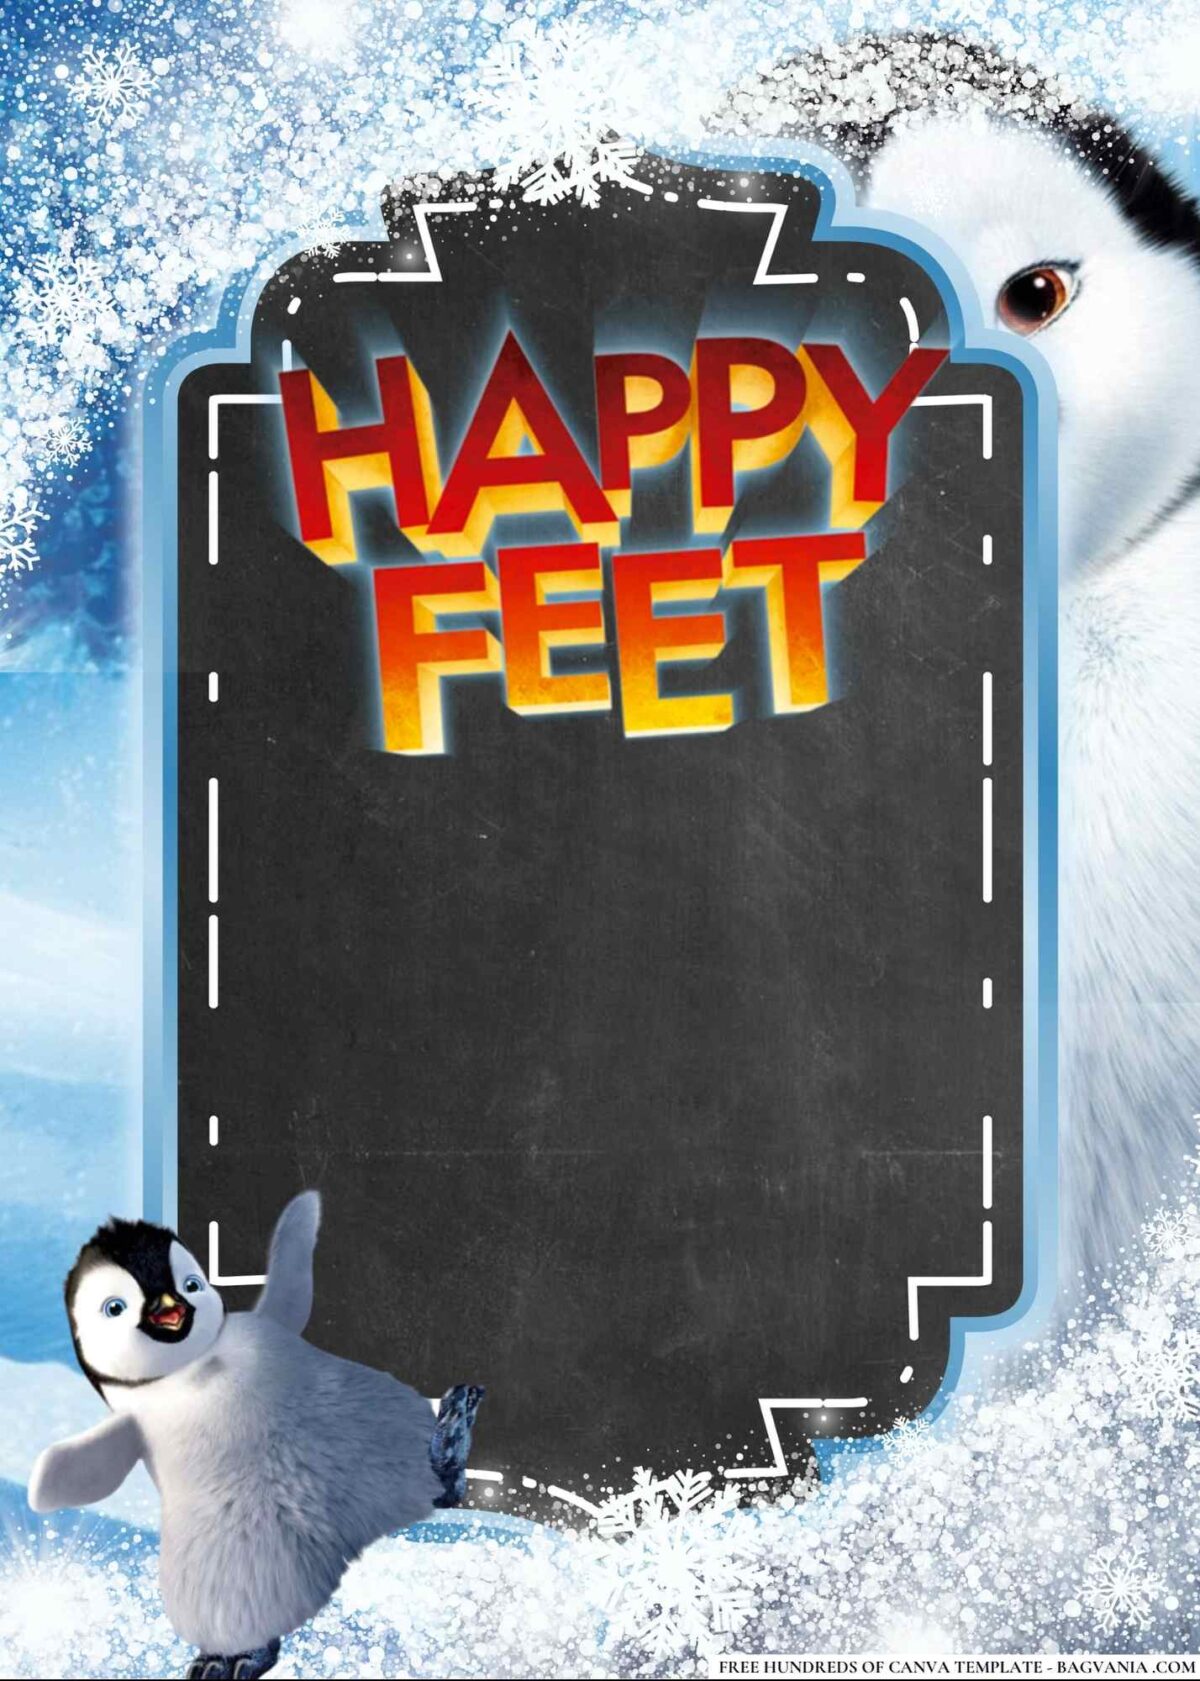 FREE Editable Happy Feet Birthday Invitations